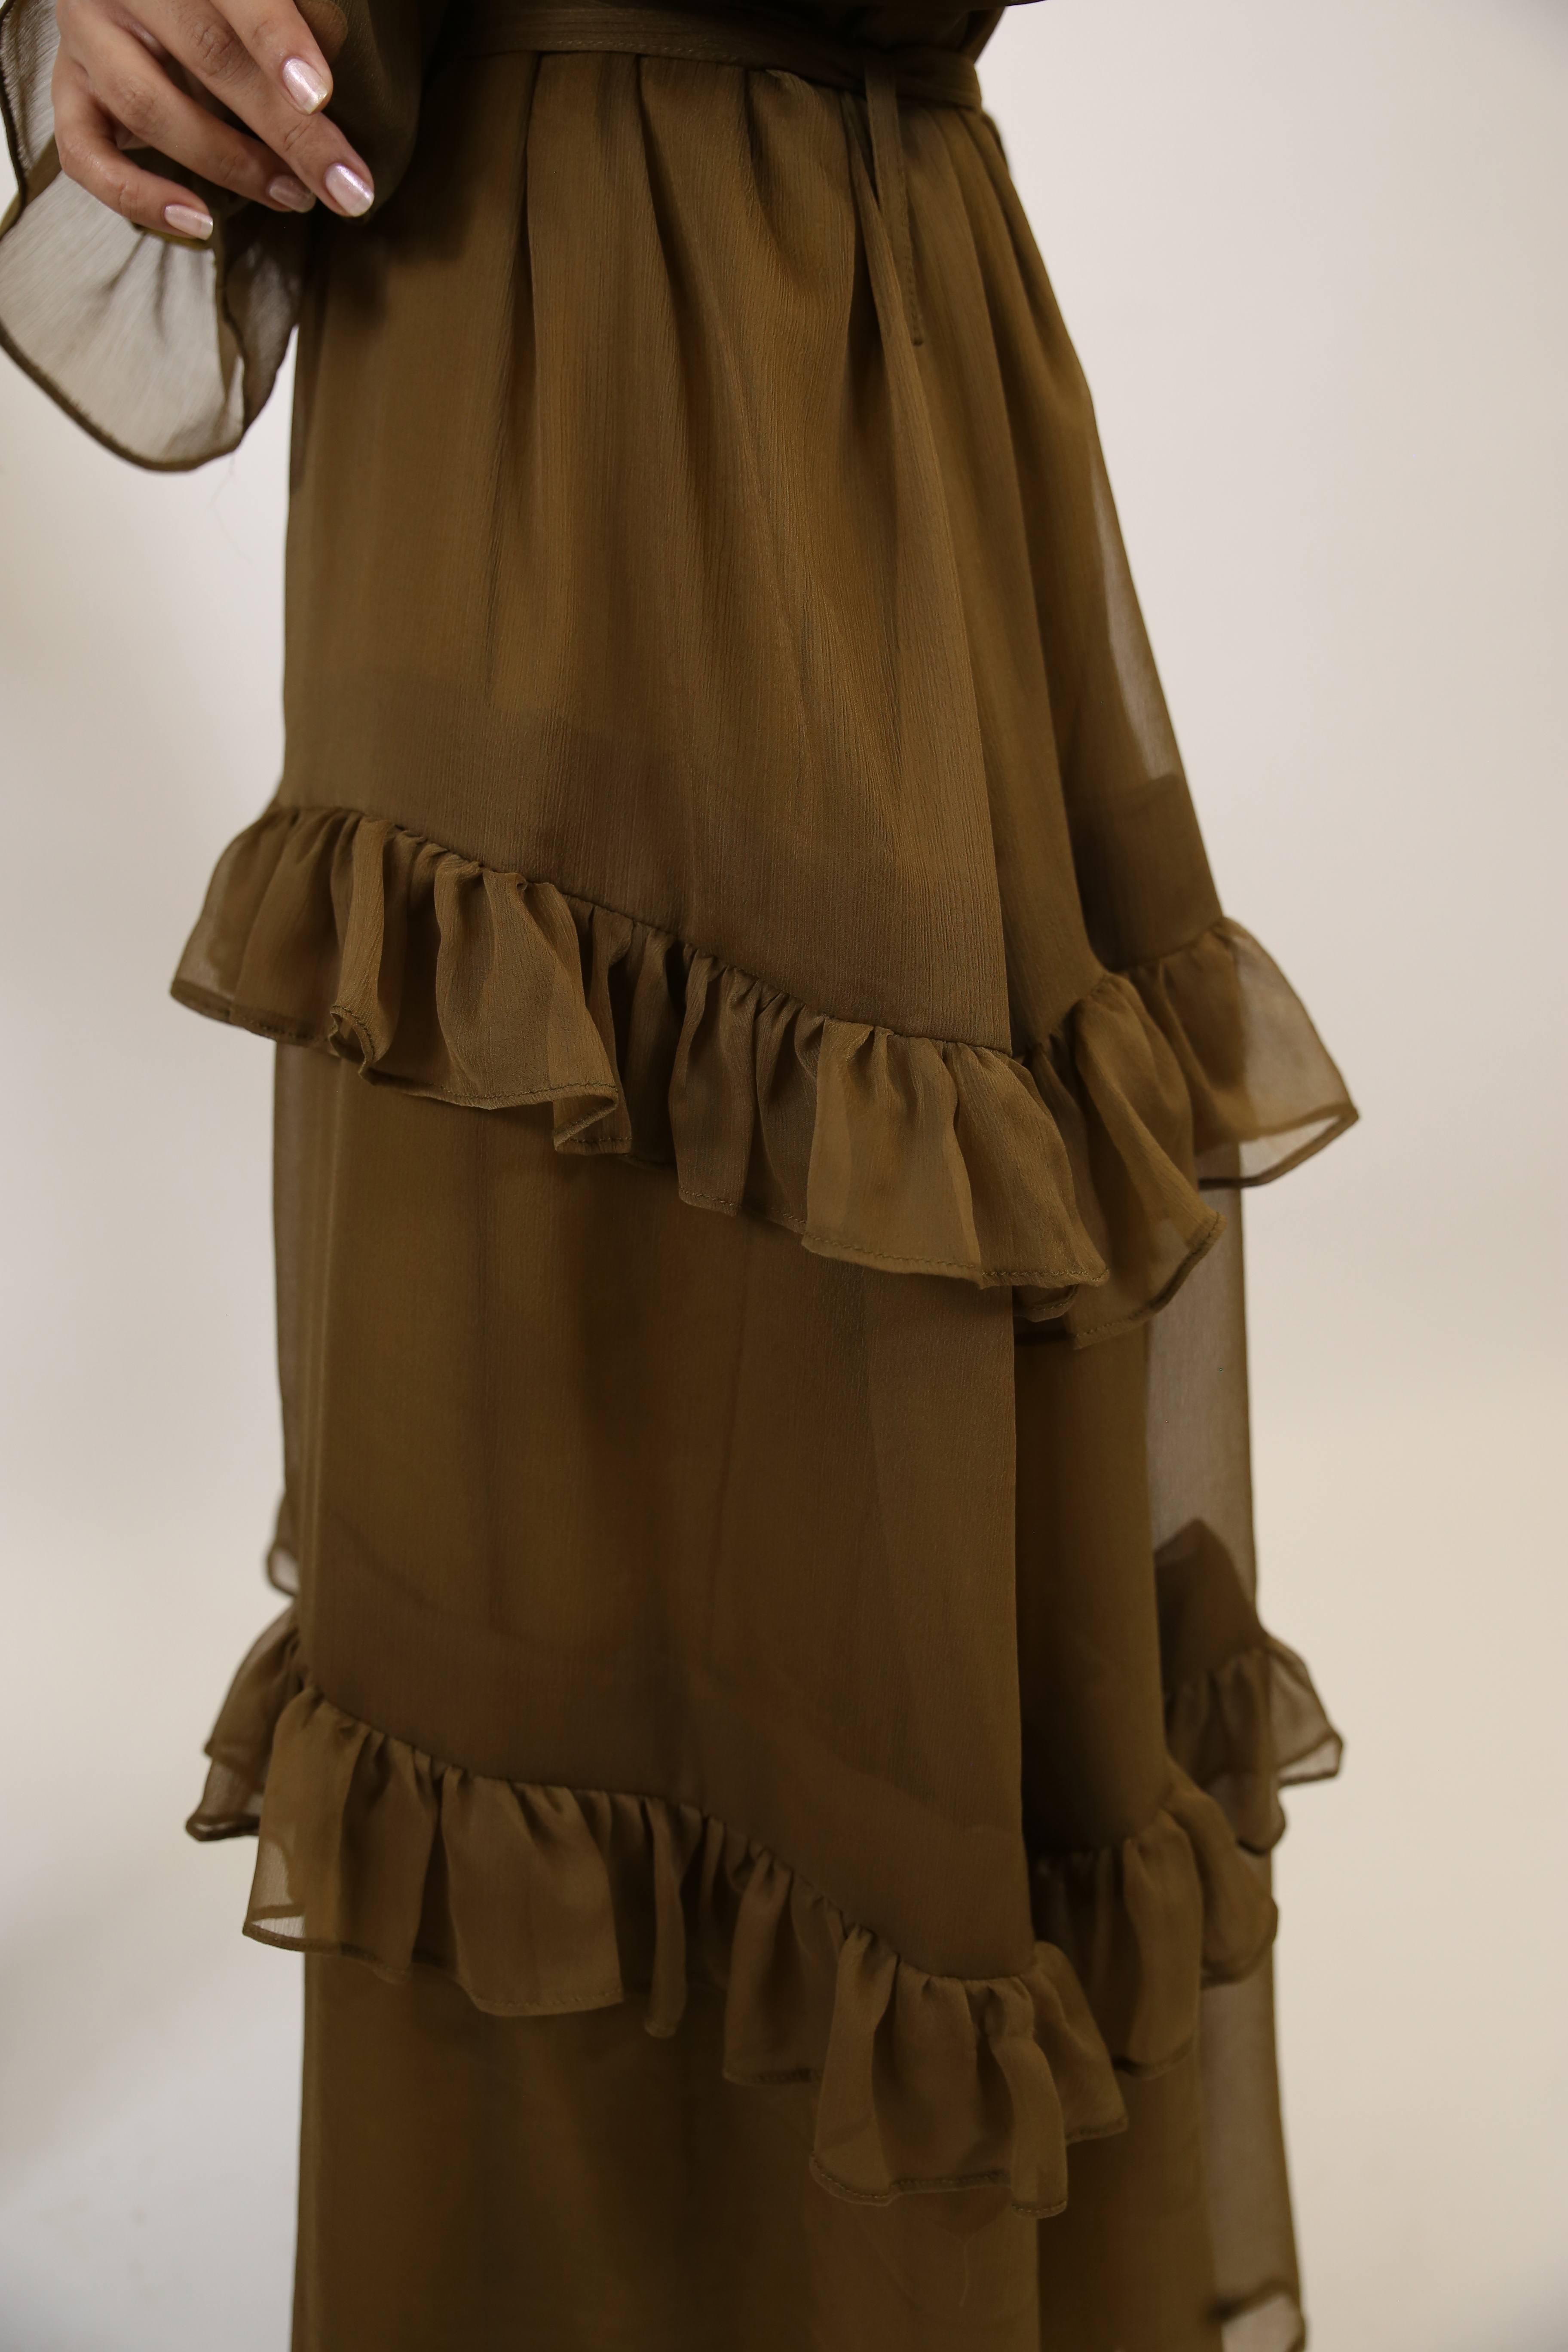 Zaytoon- Radiant chiffon fully lined maxi dress with tiered ruffles- Olive Green